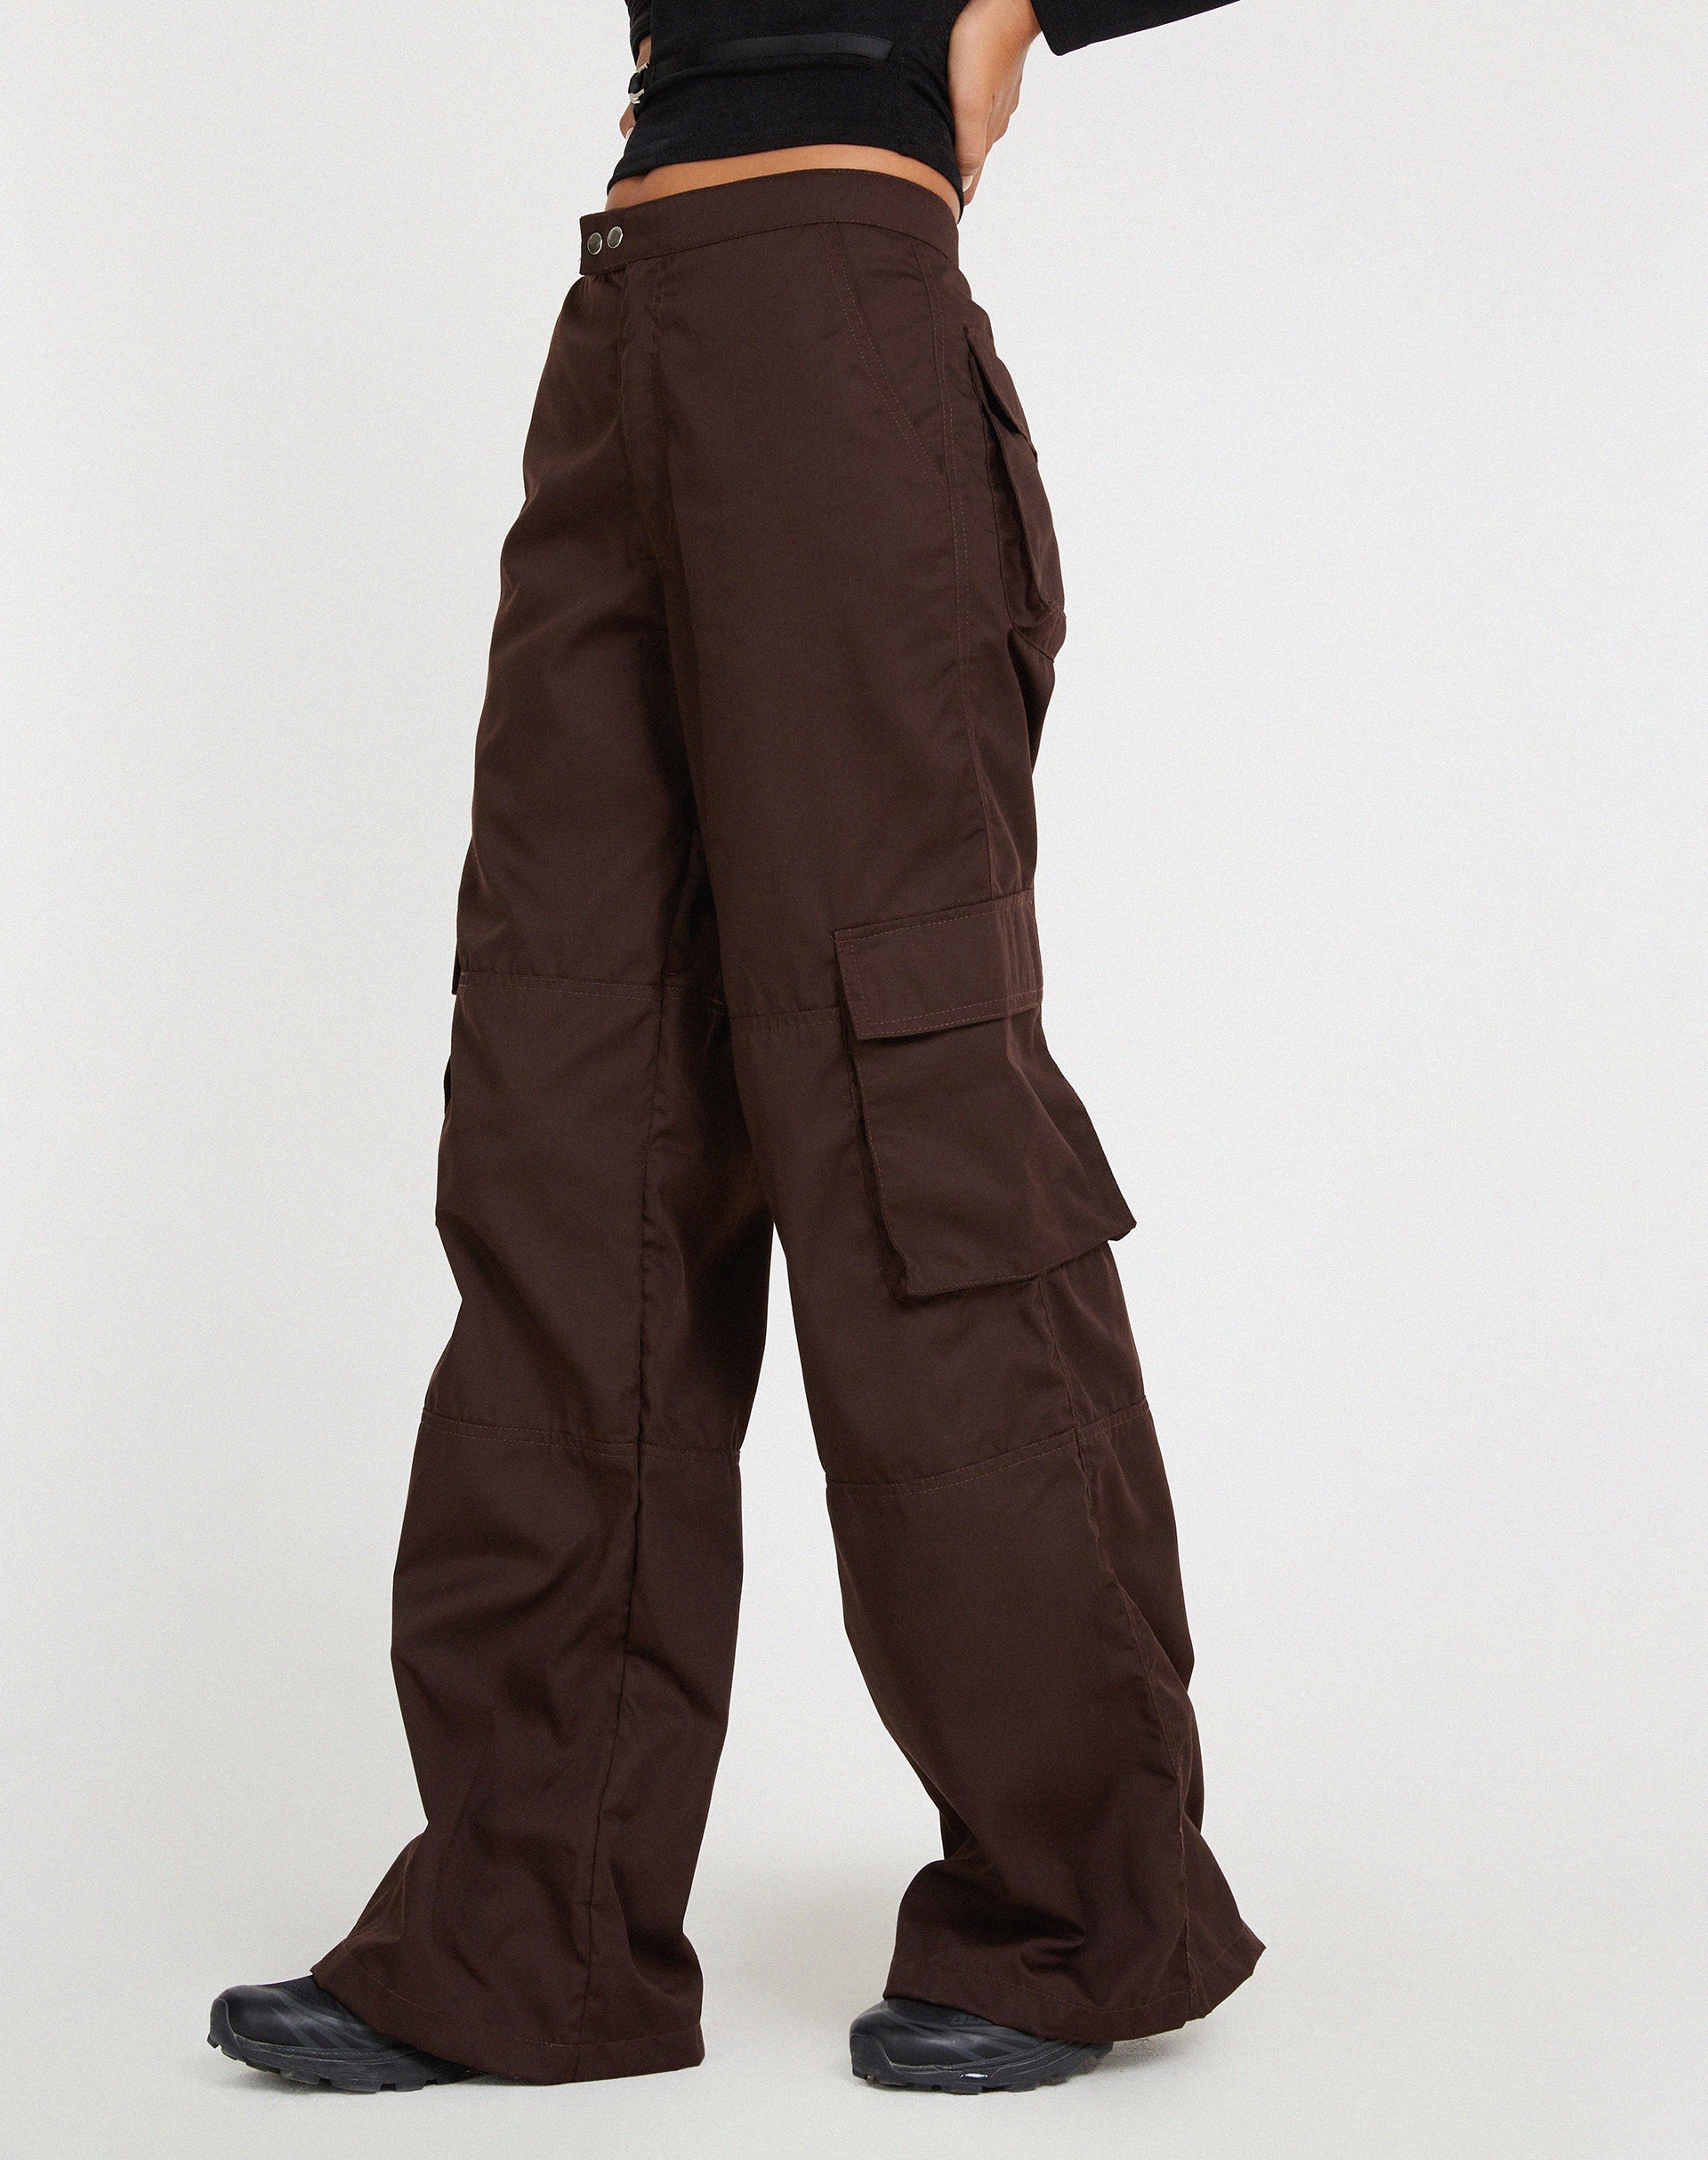 Petite Chocolate Brown Cargo Pants | Cargo pants outfit, Brown cargo pants  outfit women, Brown outfit